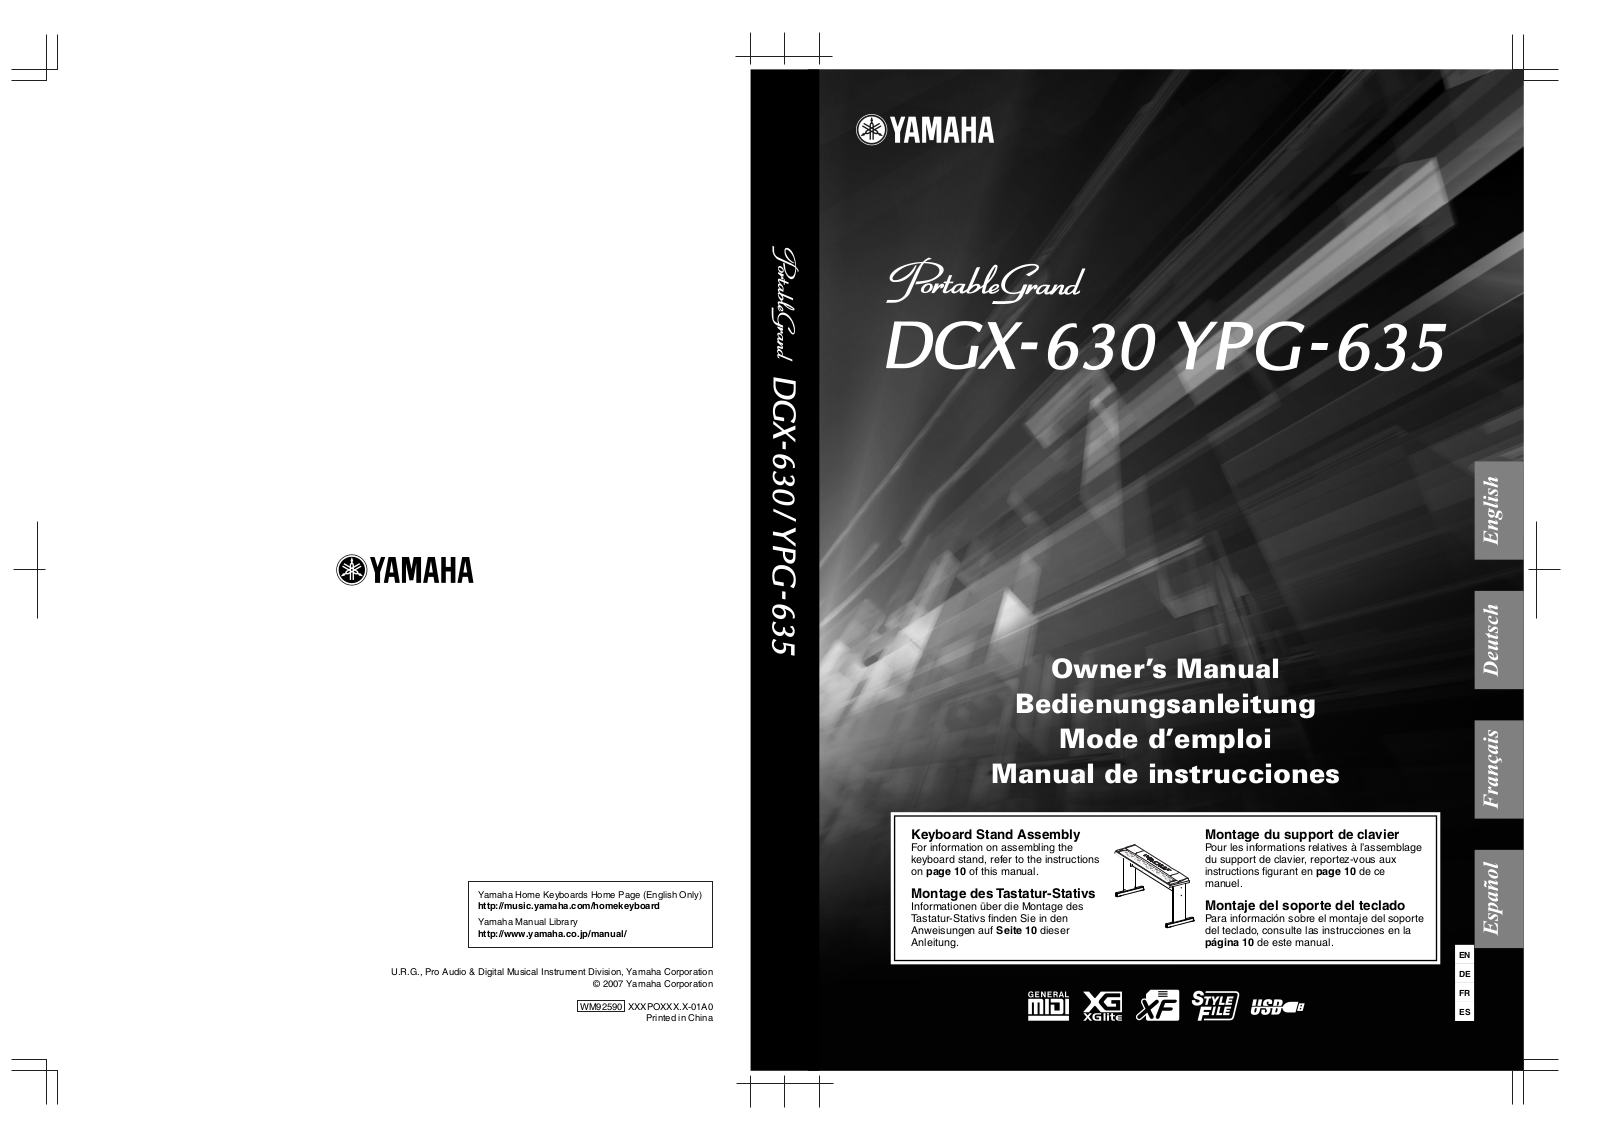 Yamaha DGX-630, YPG-635 User Manual